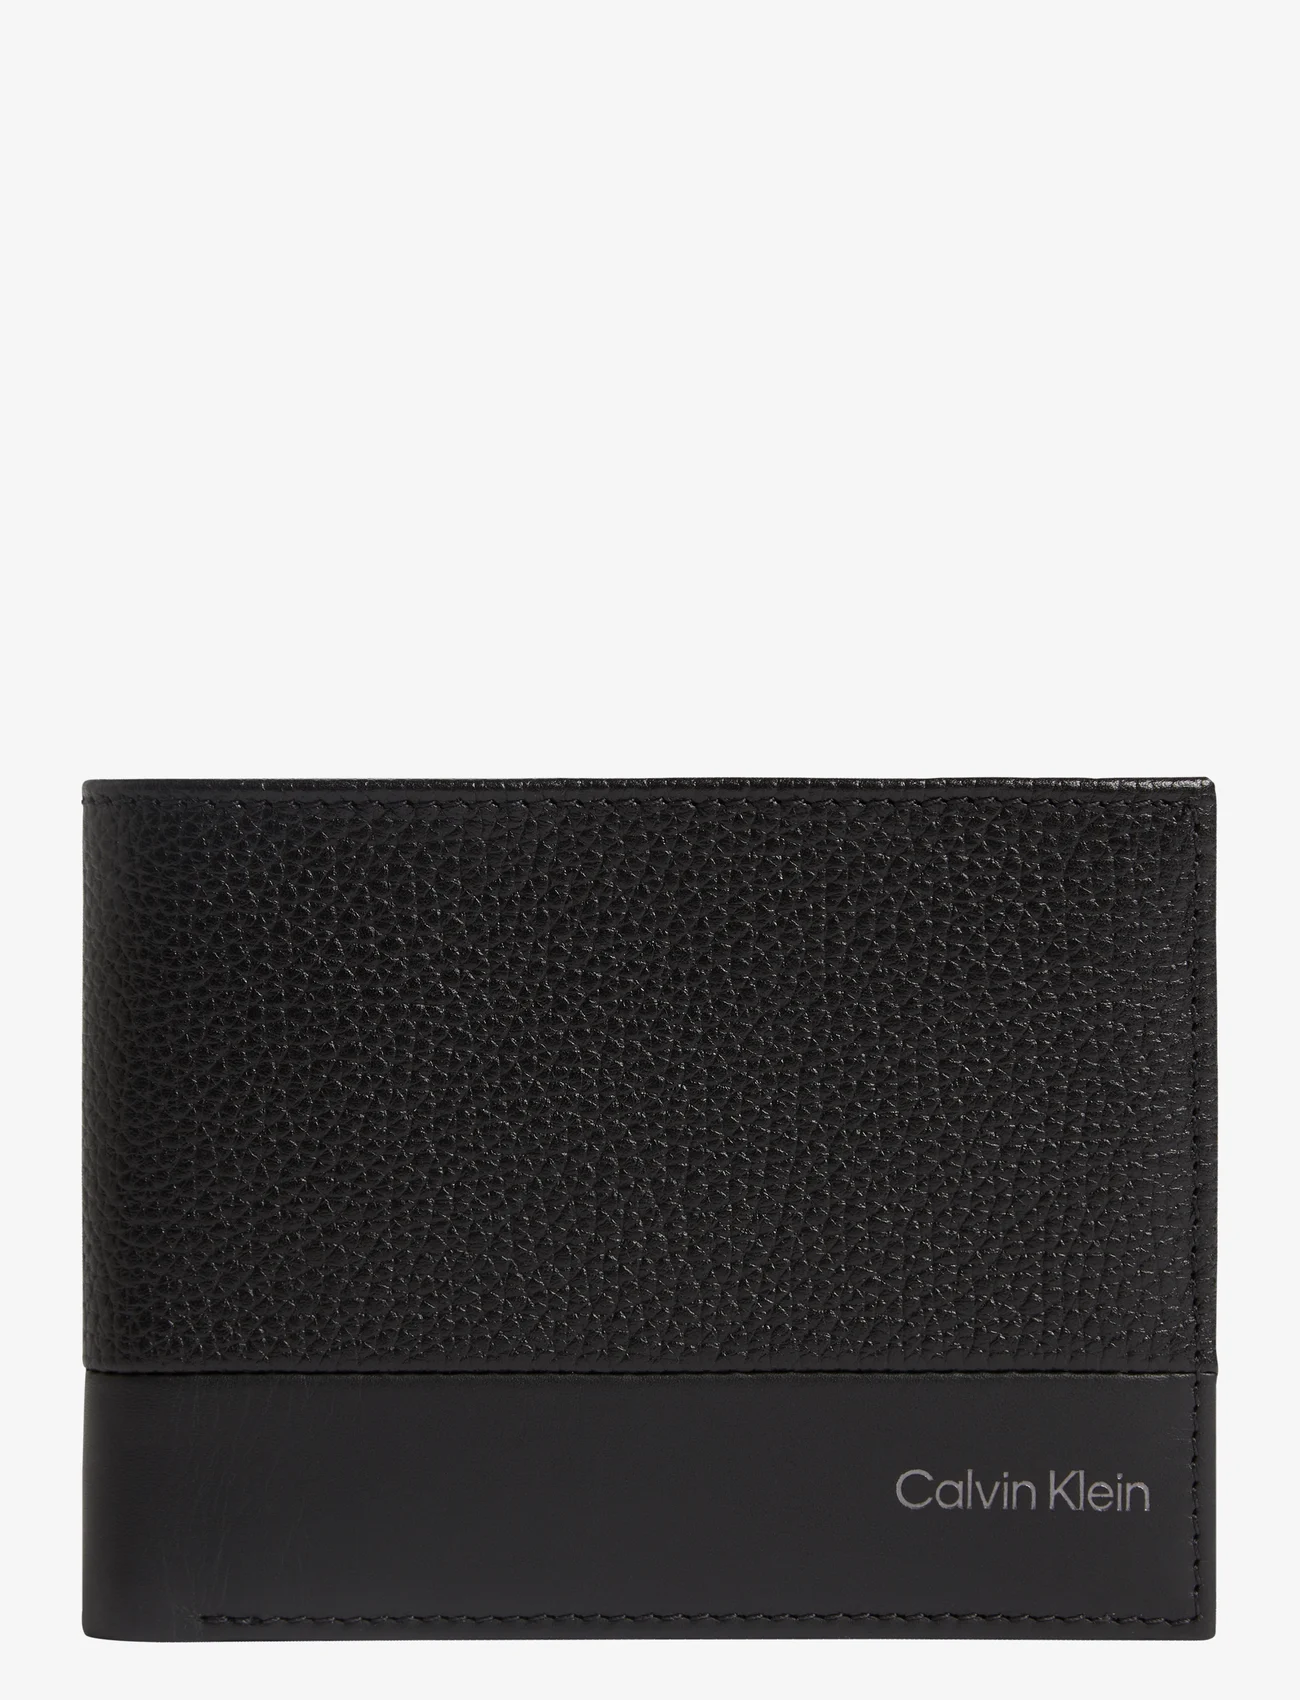 Calvin Klein - SUBTLE MIX BIFOLD 5CC W/COIN L - punge - ck black - 0